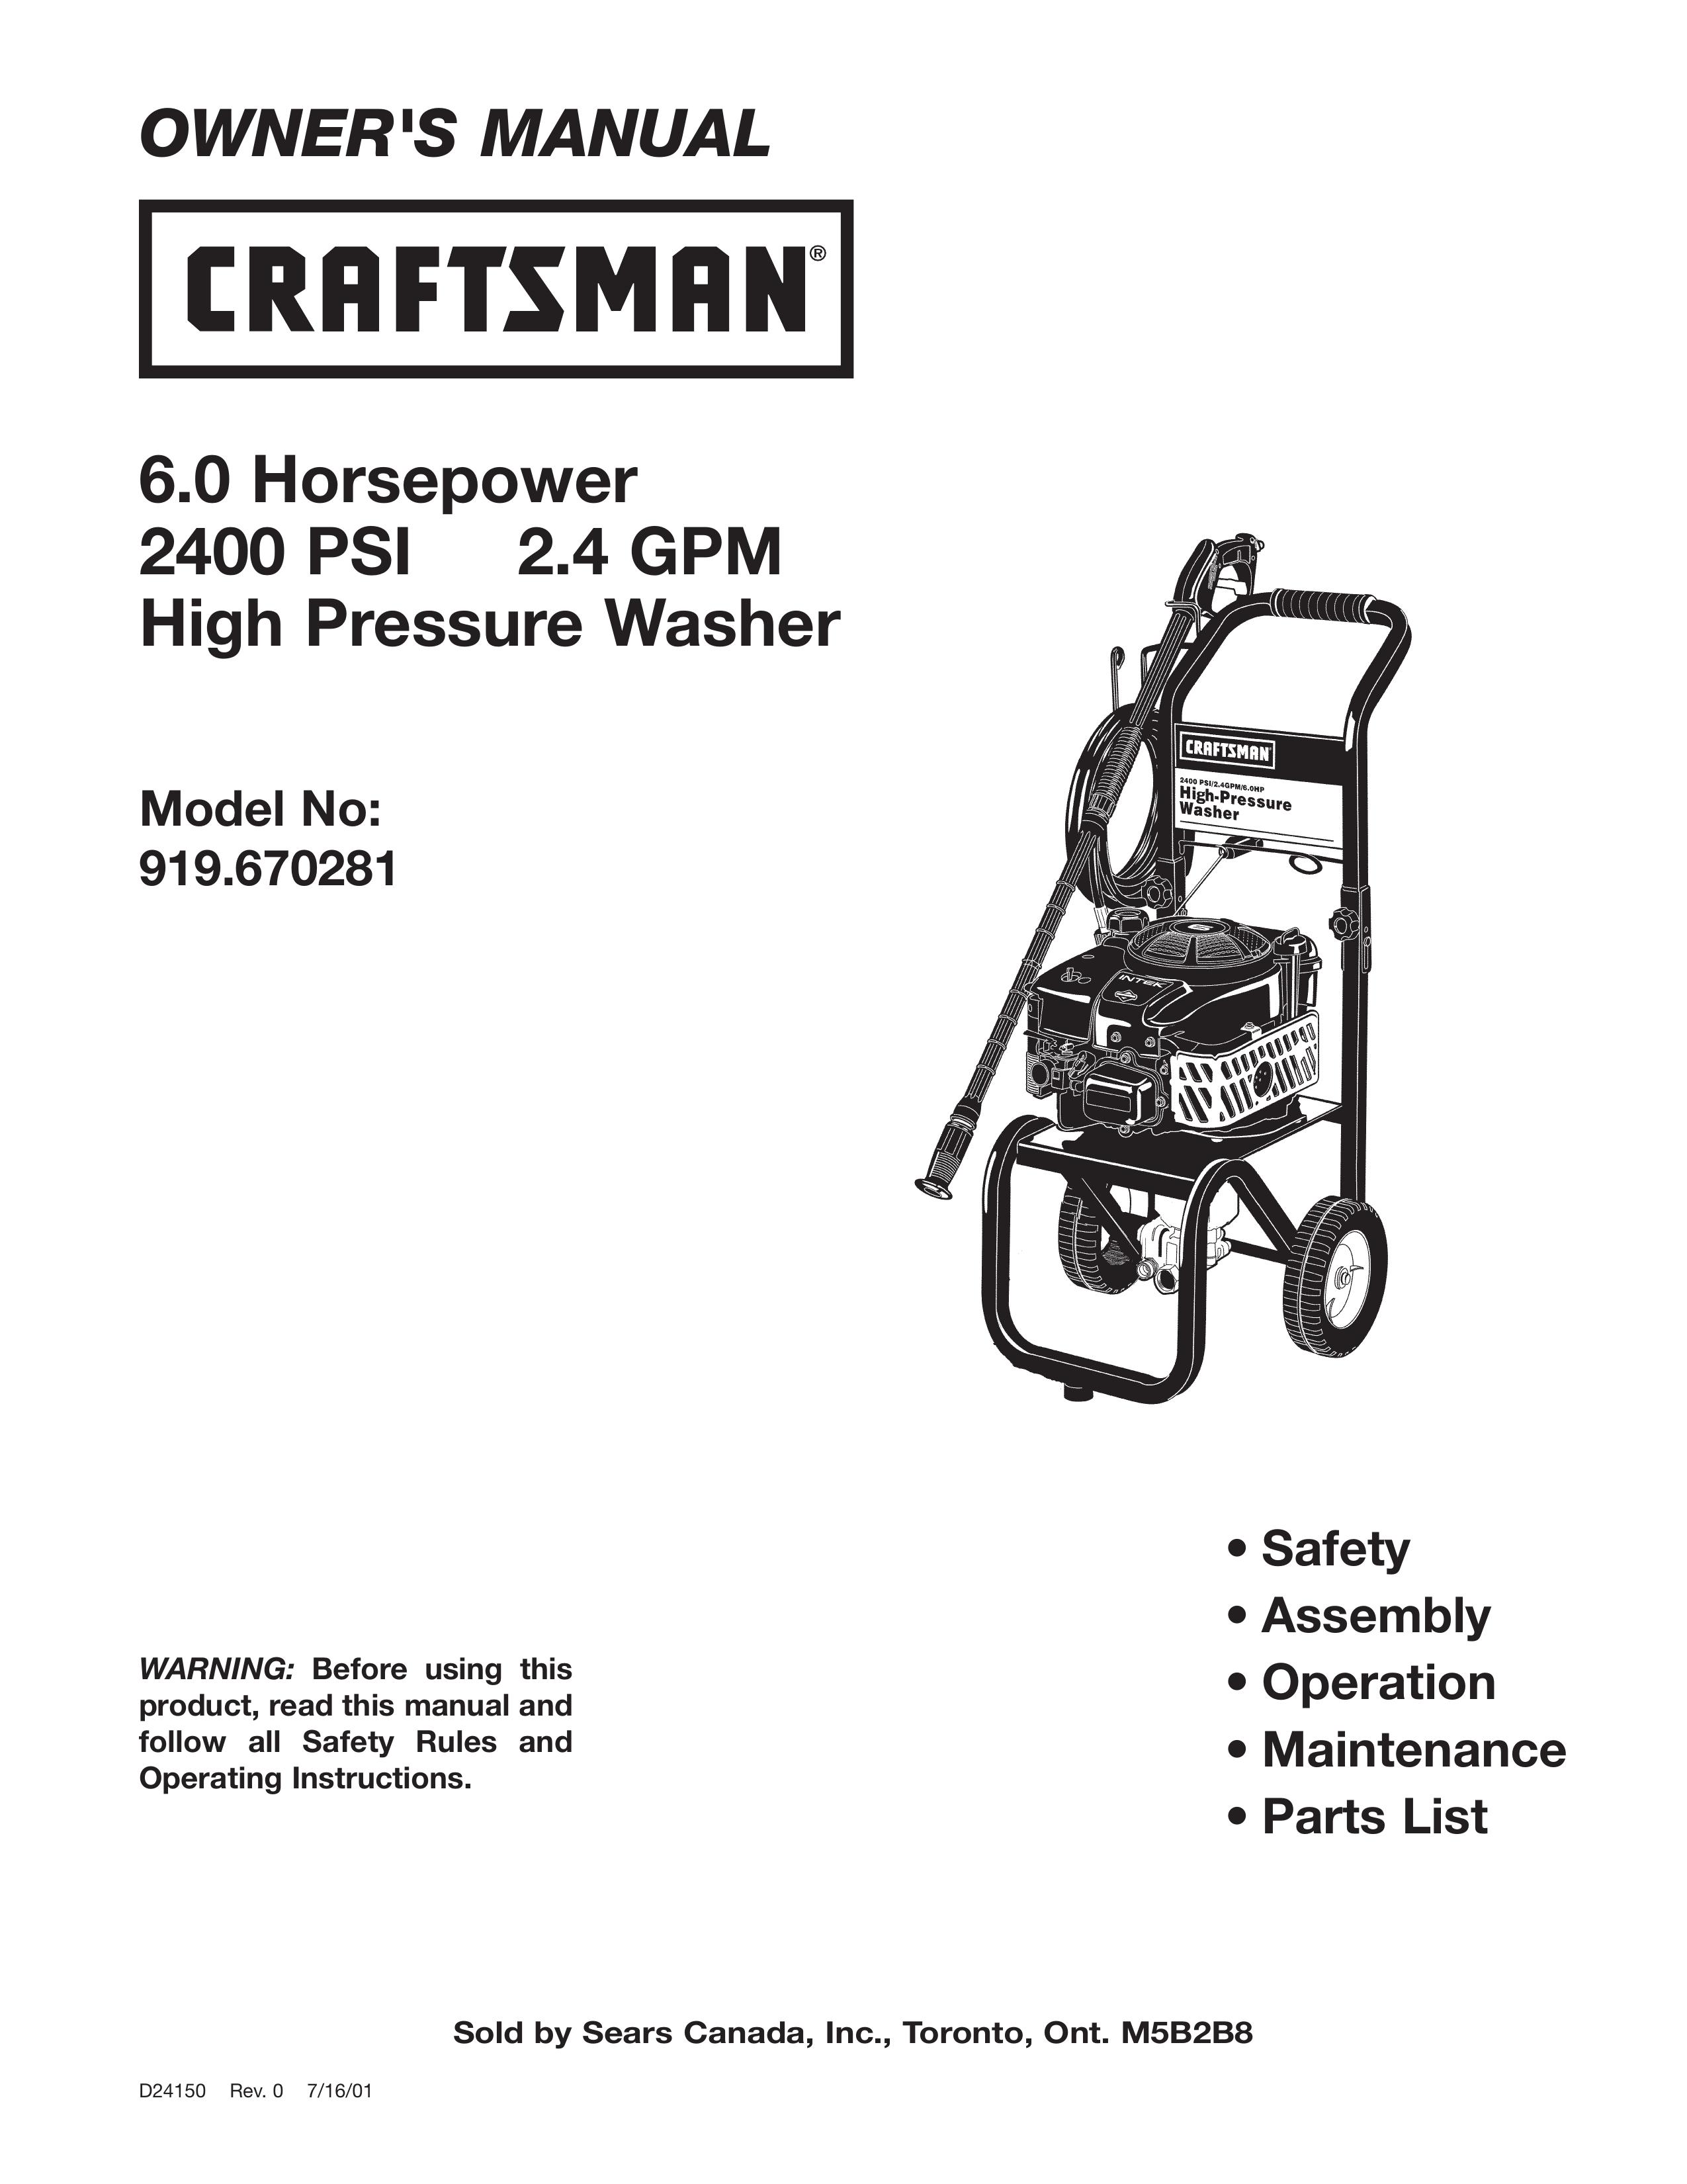 Craftsman 919.670281 Pressure Washer User Manual